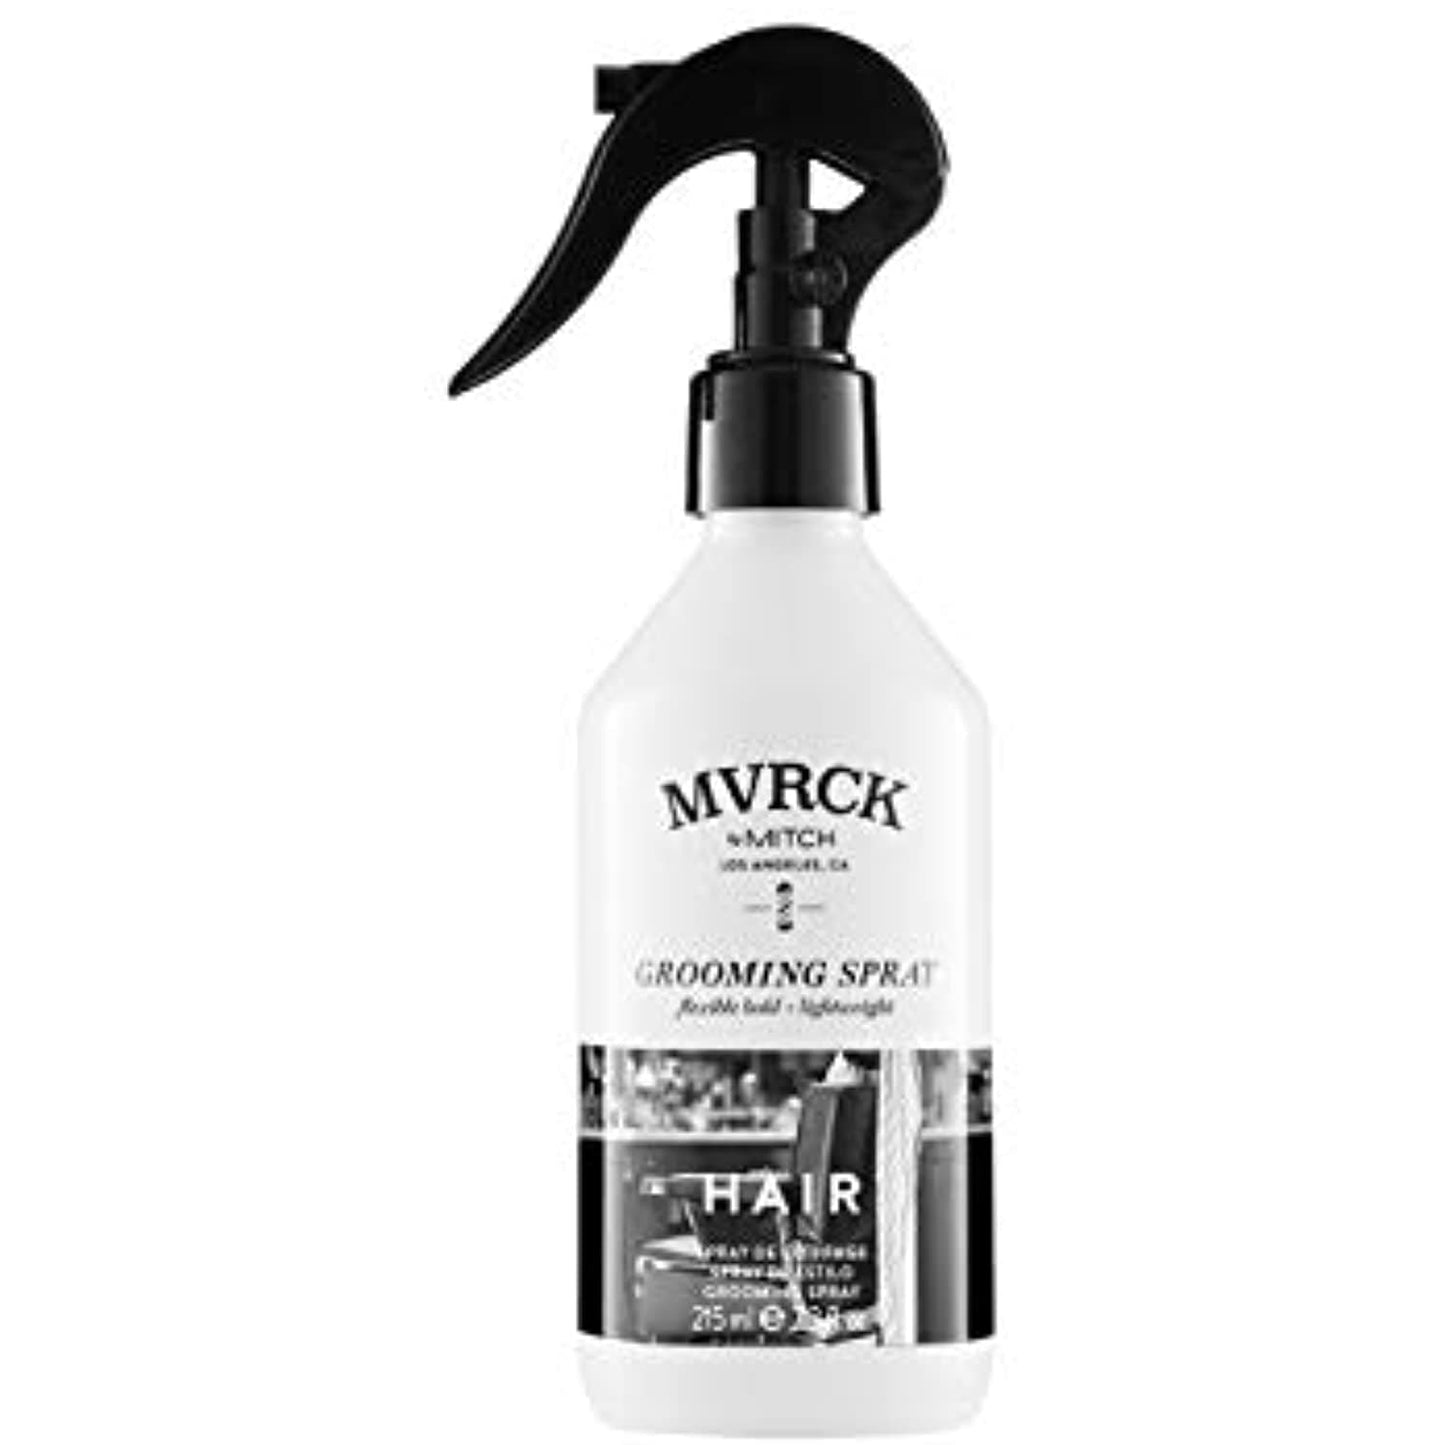 MVRCK Grooming Spray 7.5 floz.